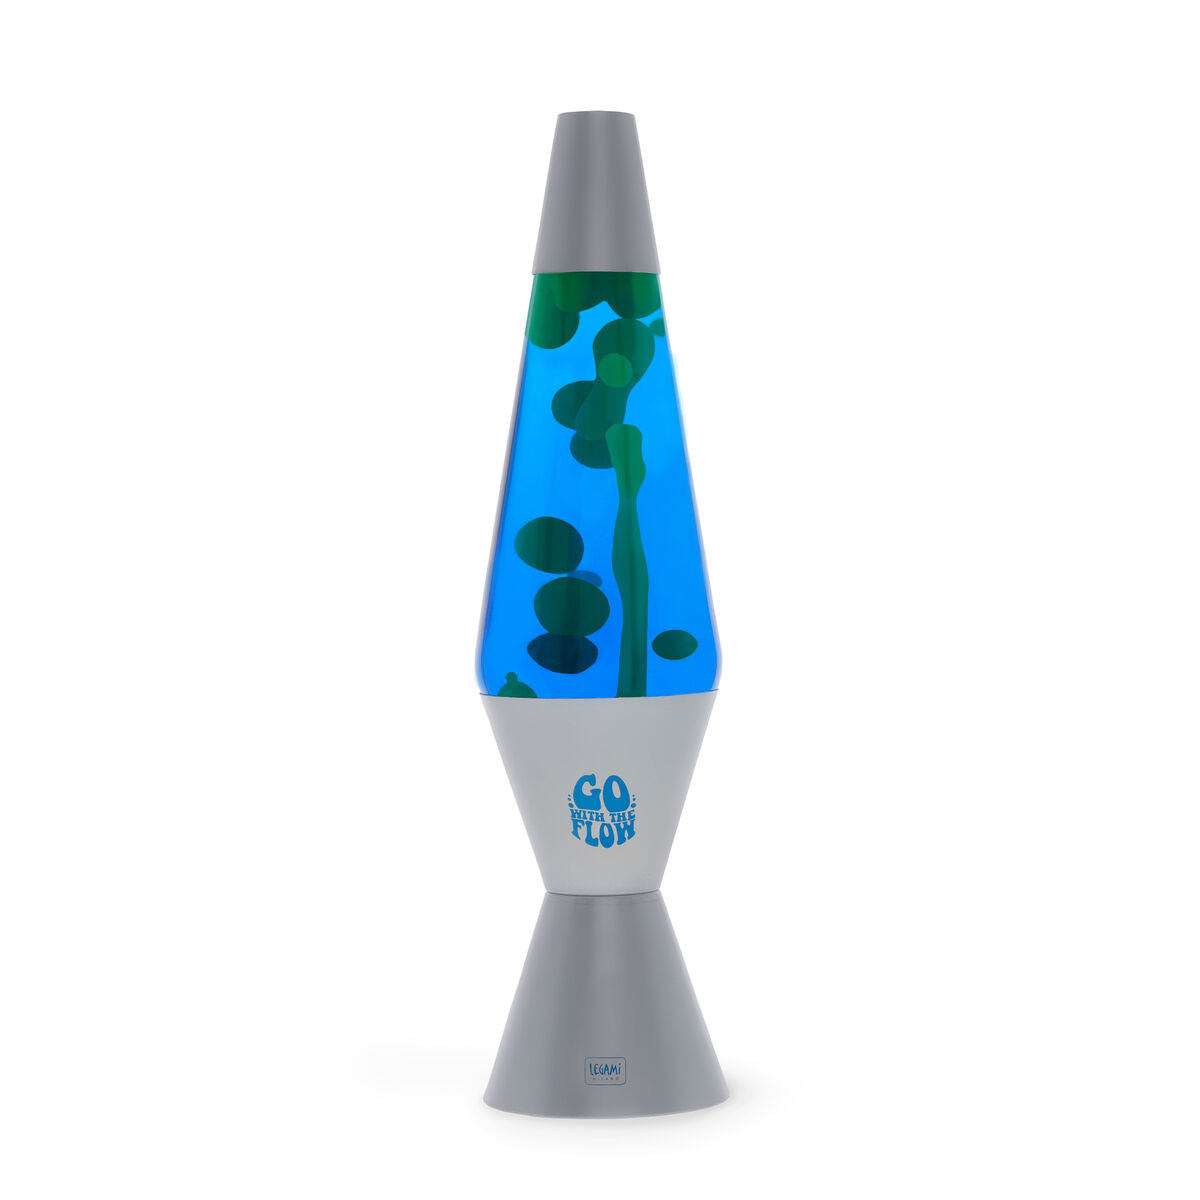 Une lampe fusée – La boite verte